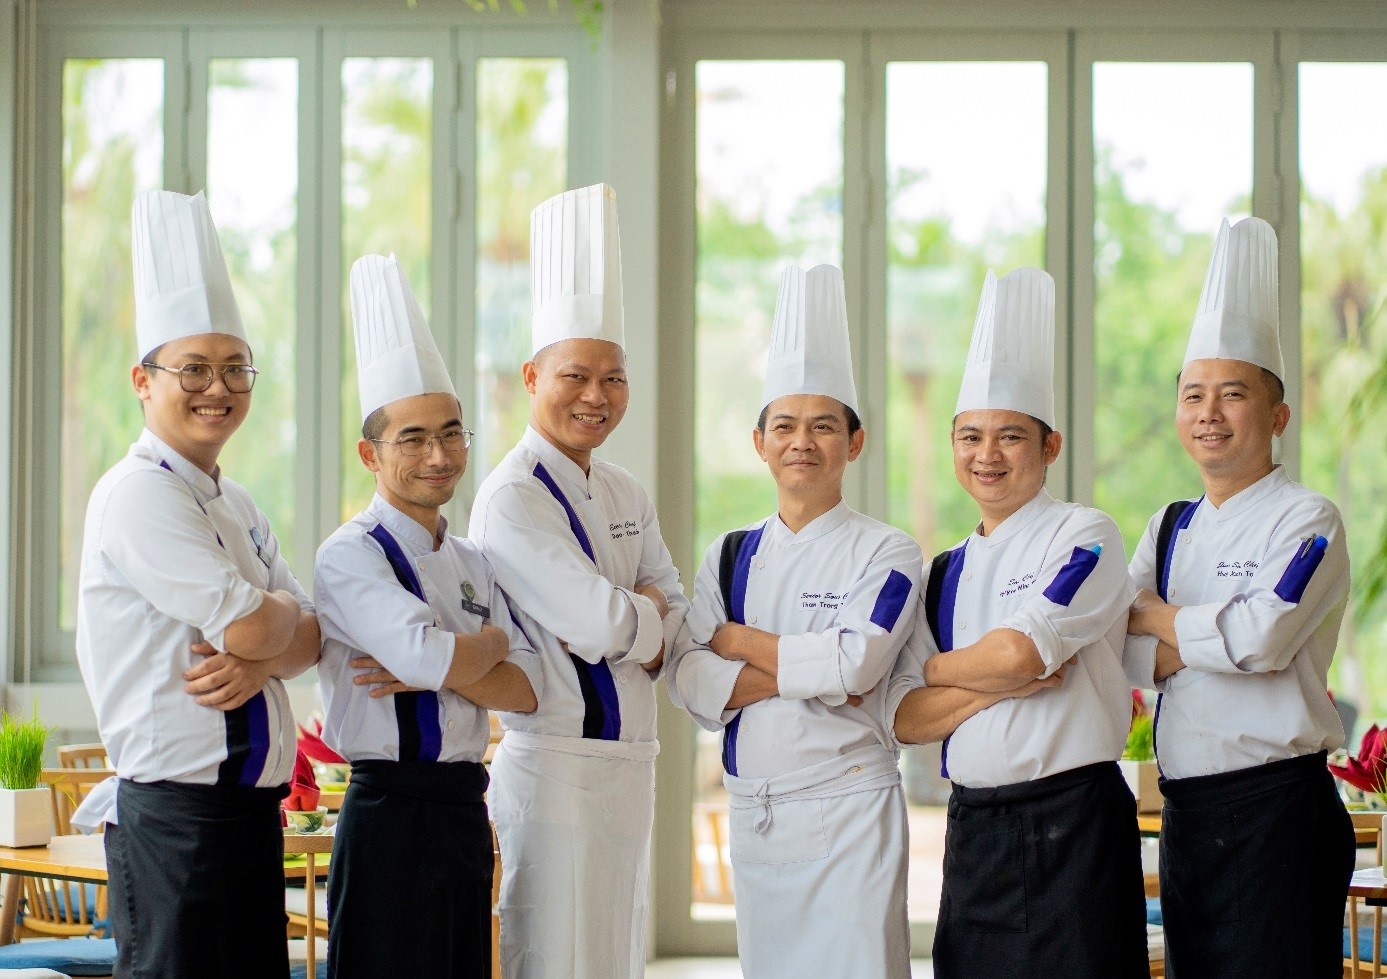 Veranda Vietnamese presents culinary journey through Vietnam